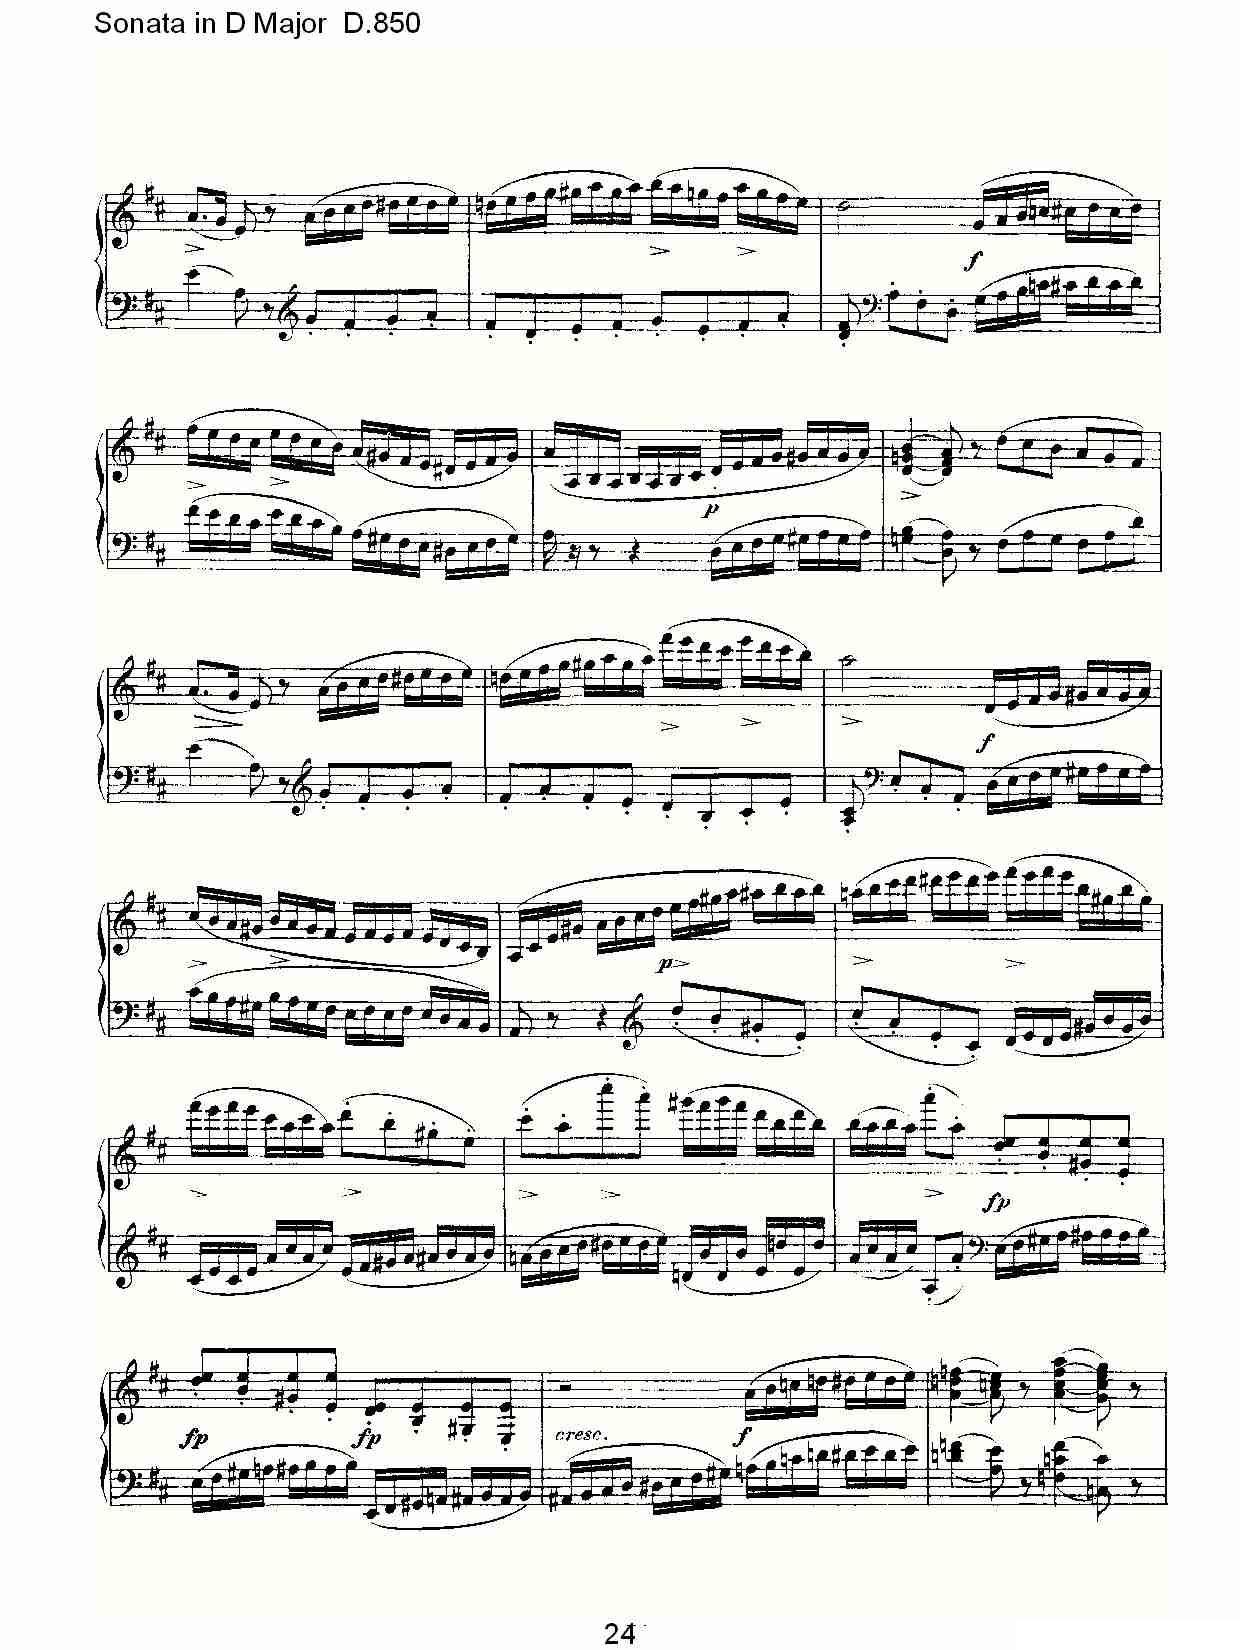 Sonata in D Major D.850（D大调奏鸣曲 D.850）钢琴曲谱（图24）